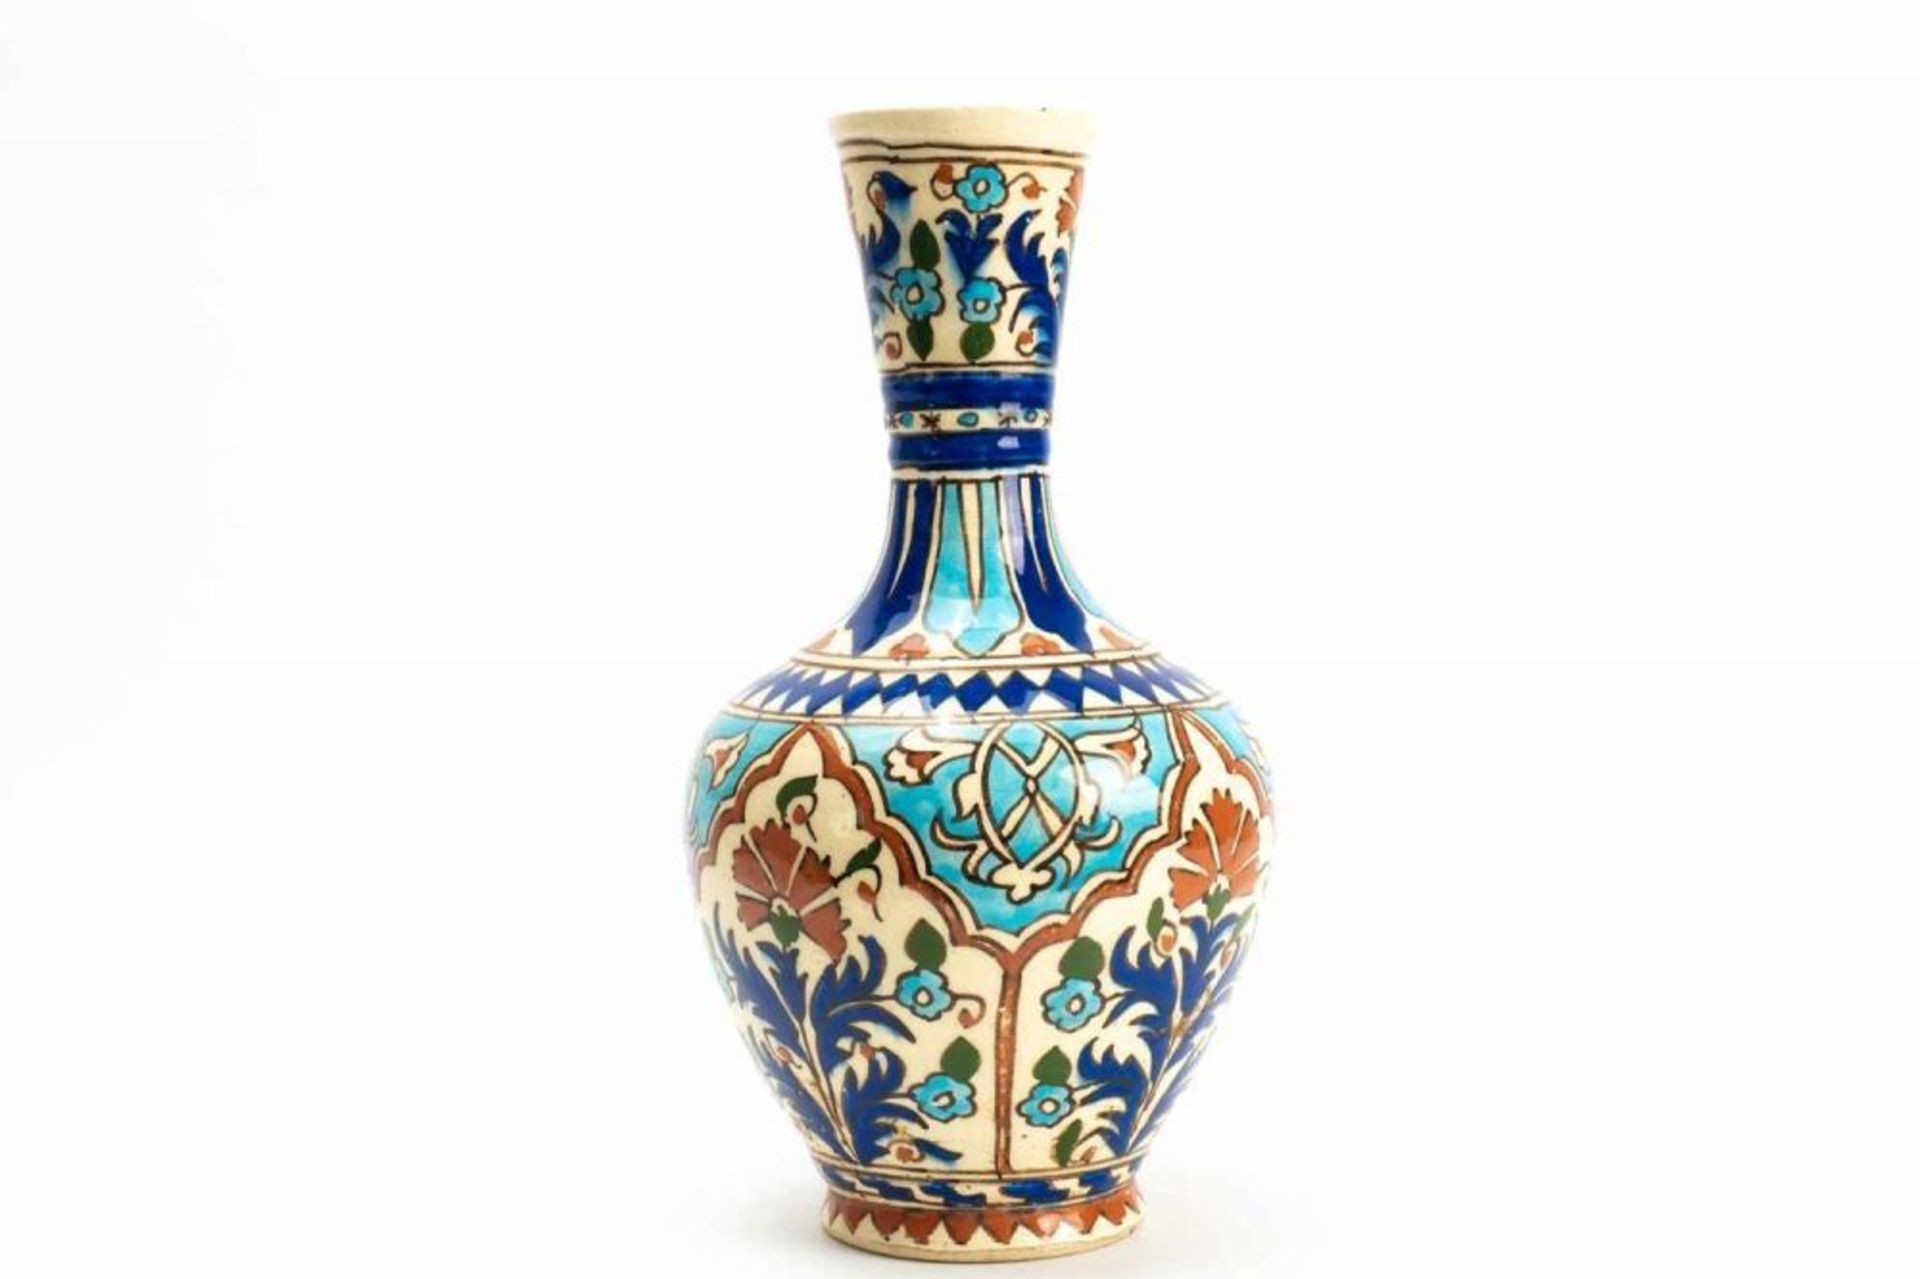 Türkische Keramikvase Iznik, wohl 19. Jh.